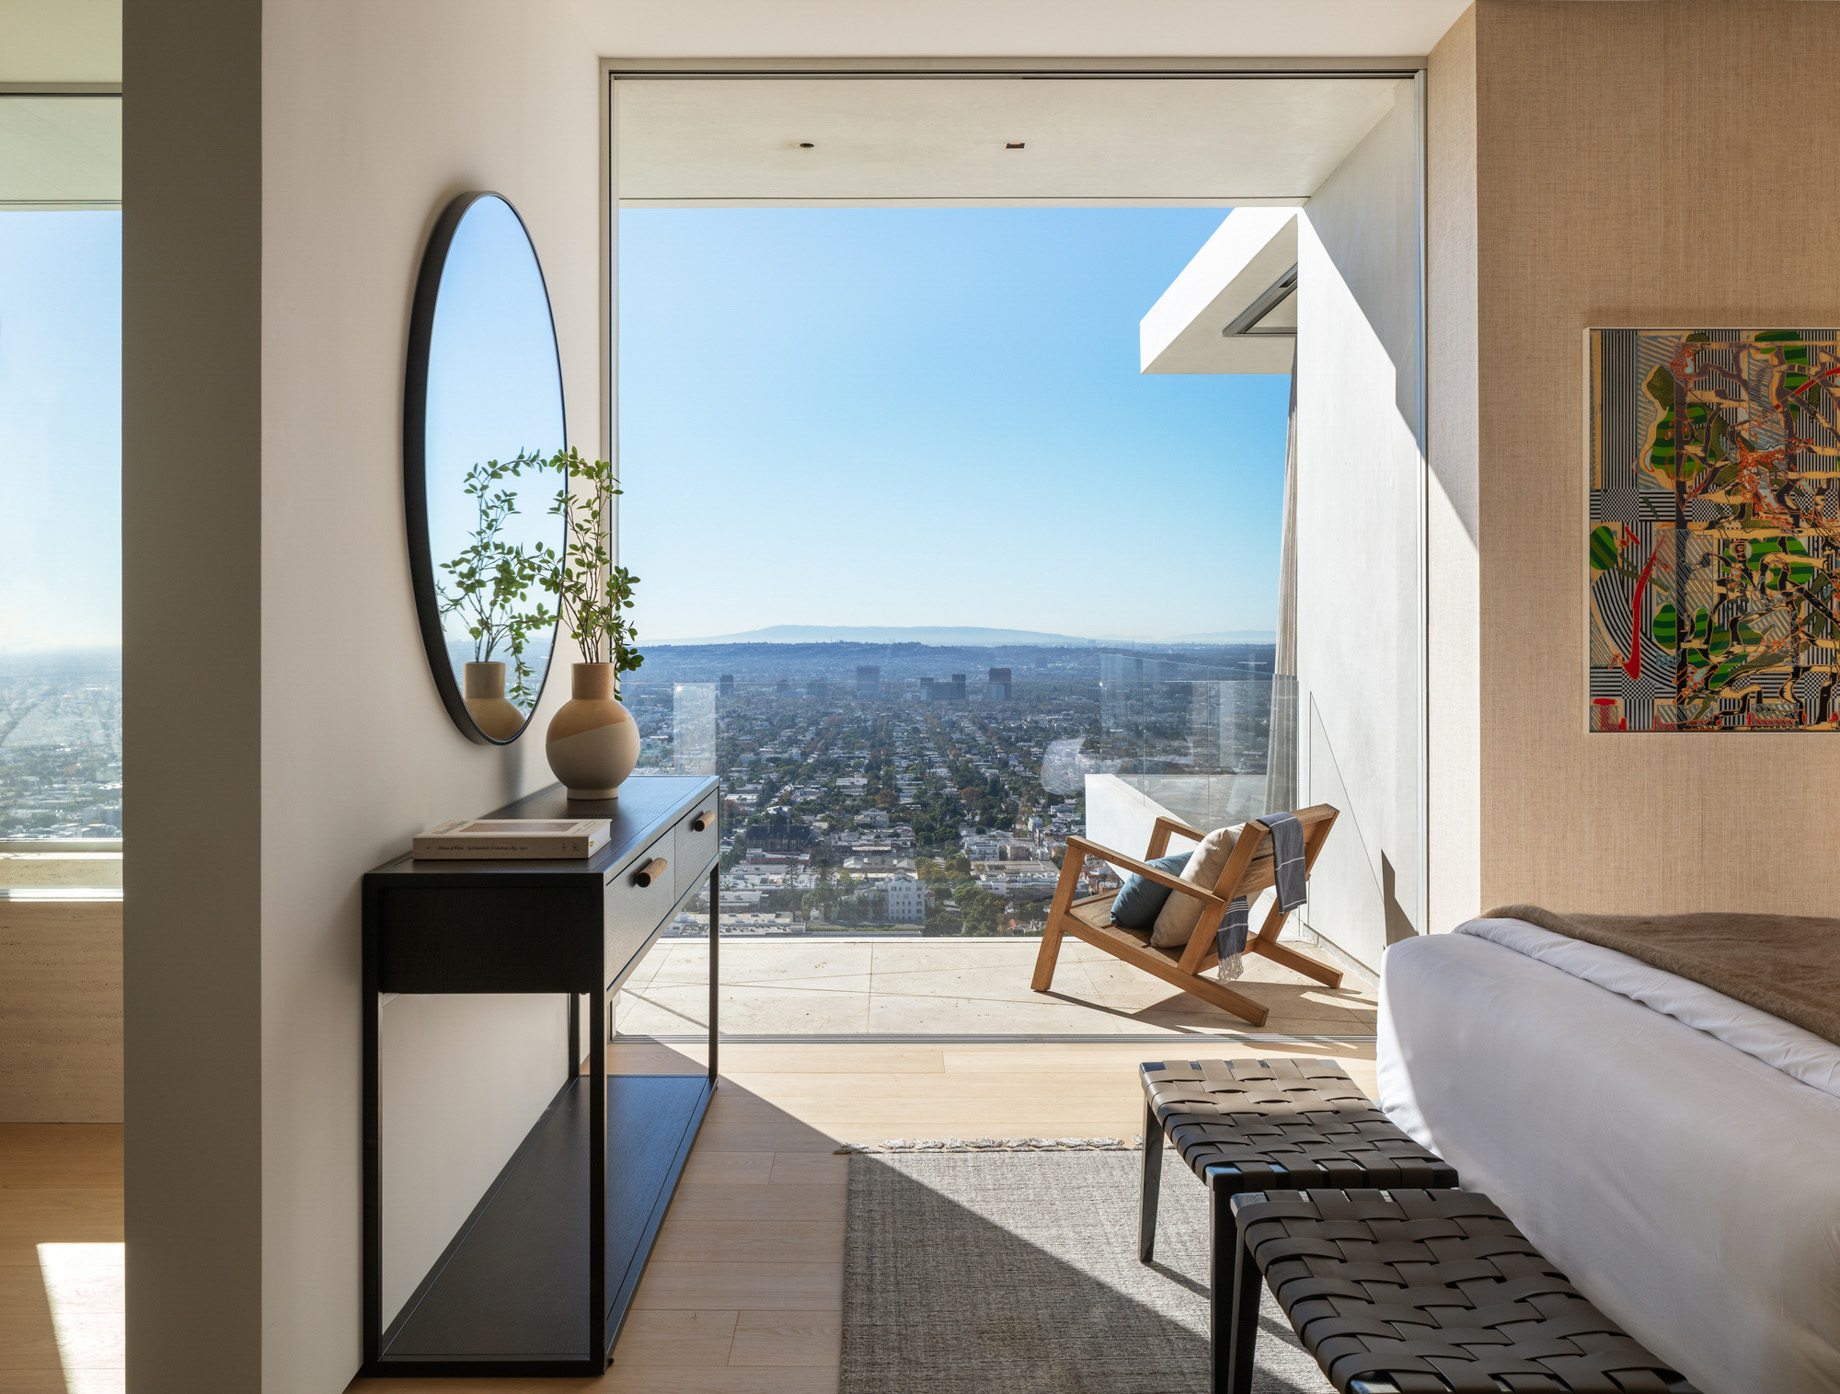 Bellgave Modern Organic Jewel Box-Like Contemporary Home – Los Angeles, CA, USA – 17